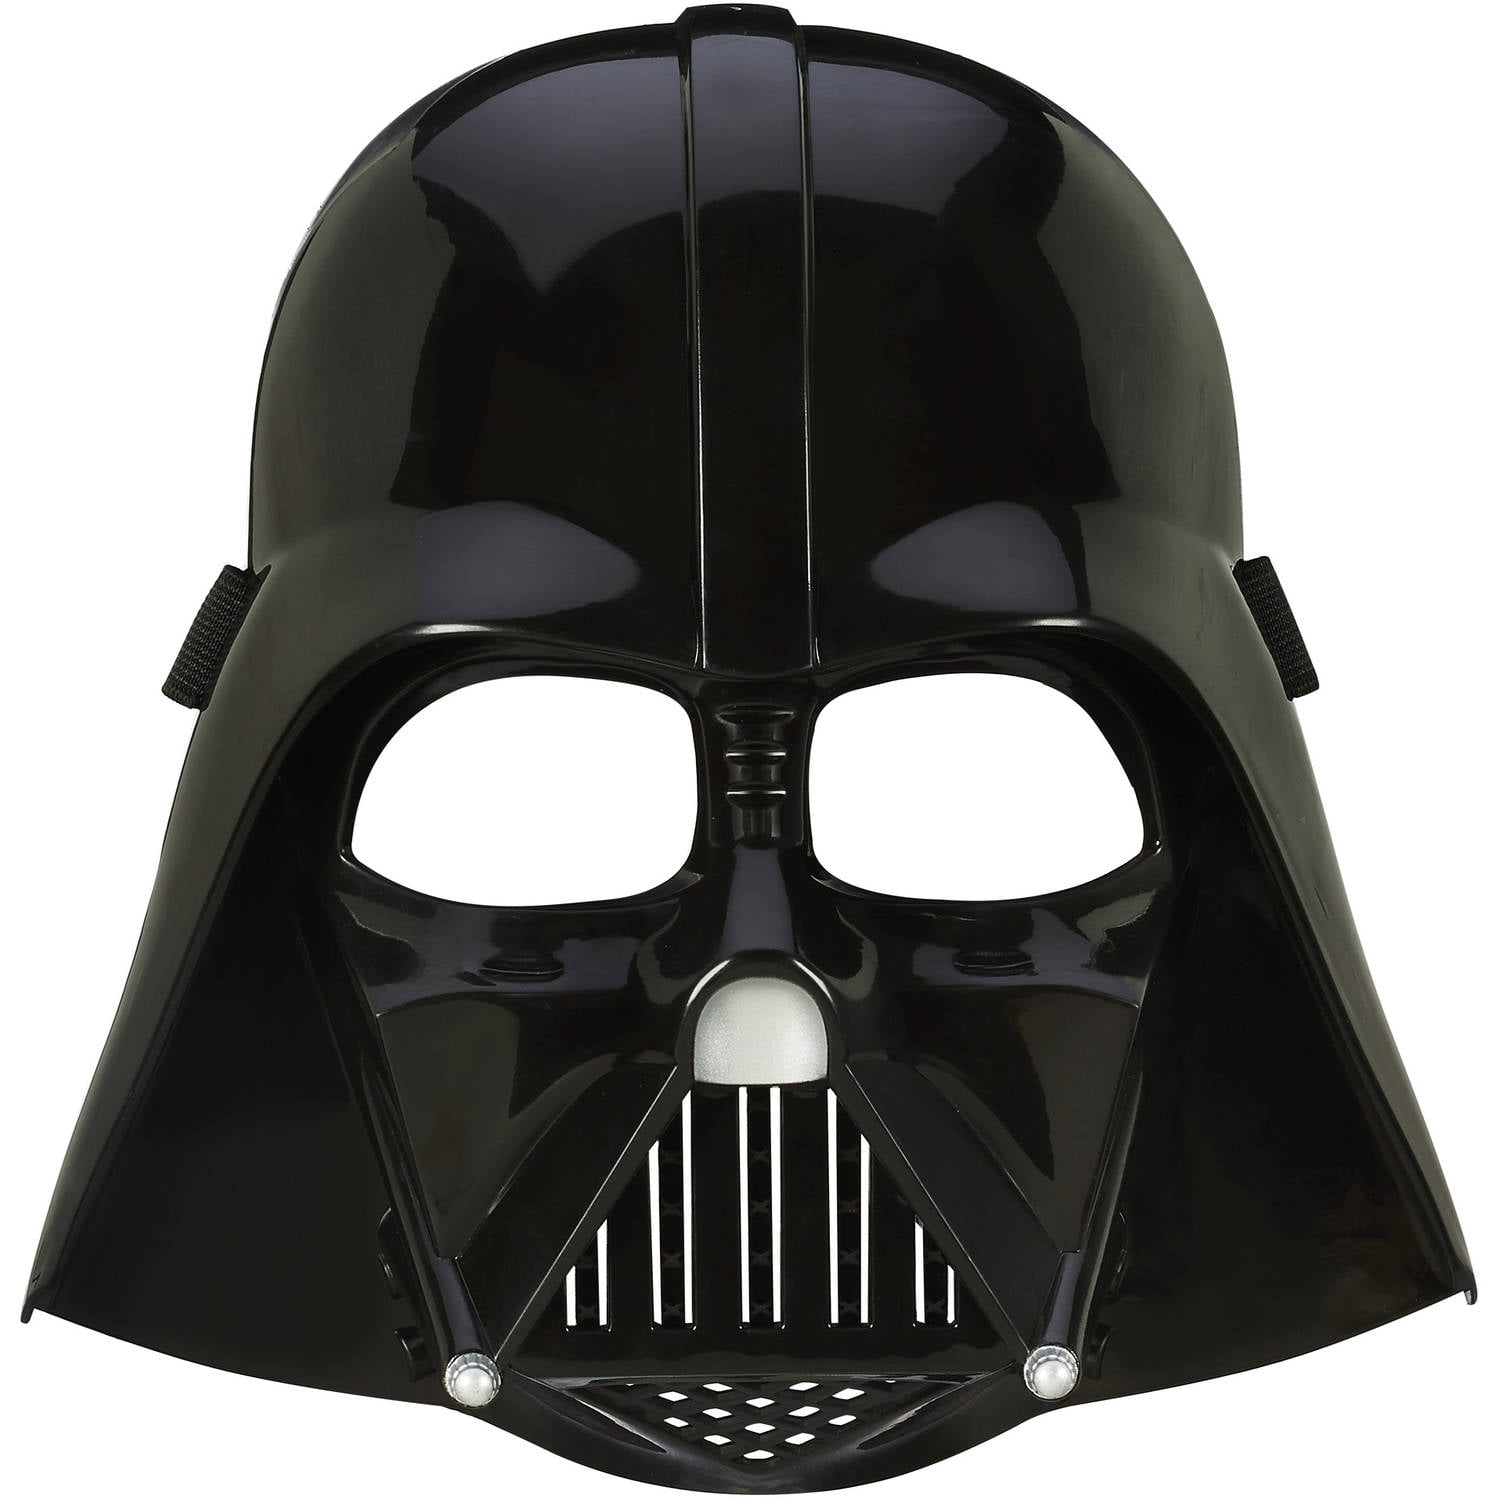 Star Wars Darth Vader Printable Masks ~ FUROSEMIDE
